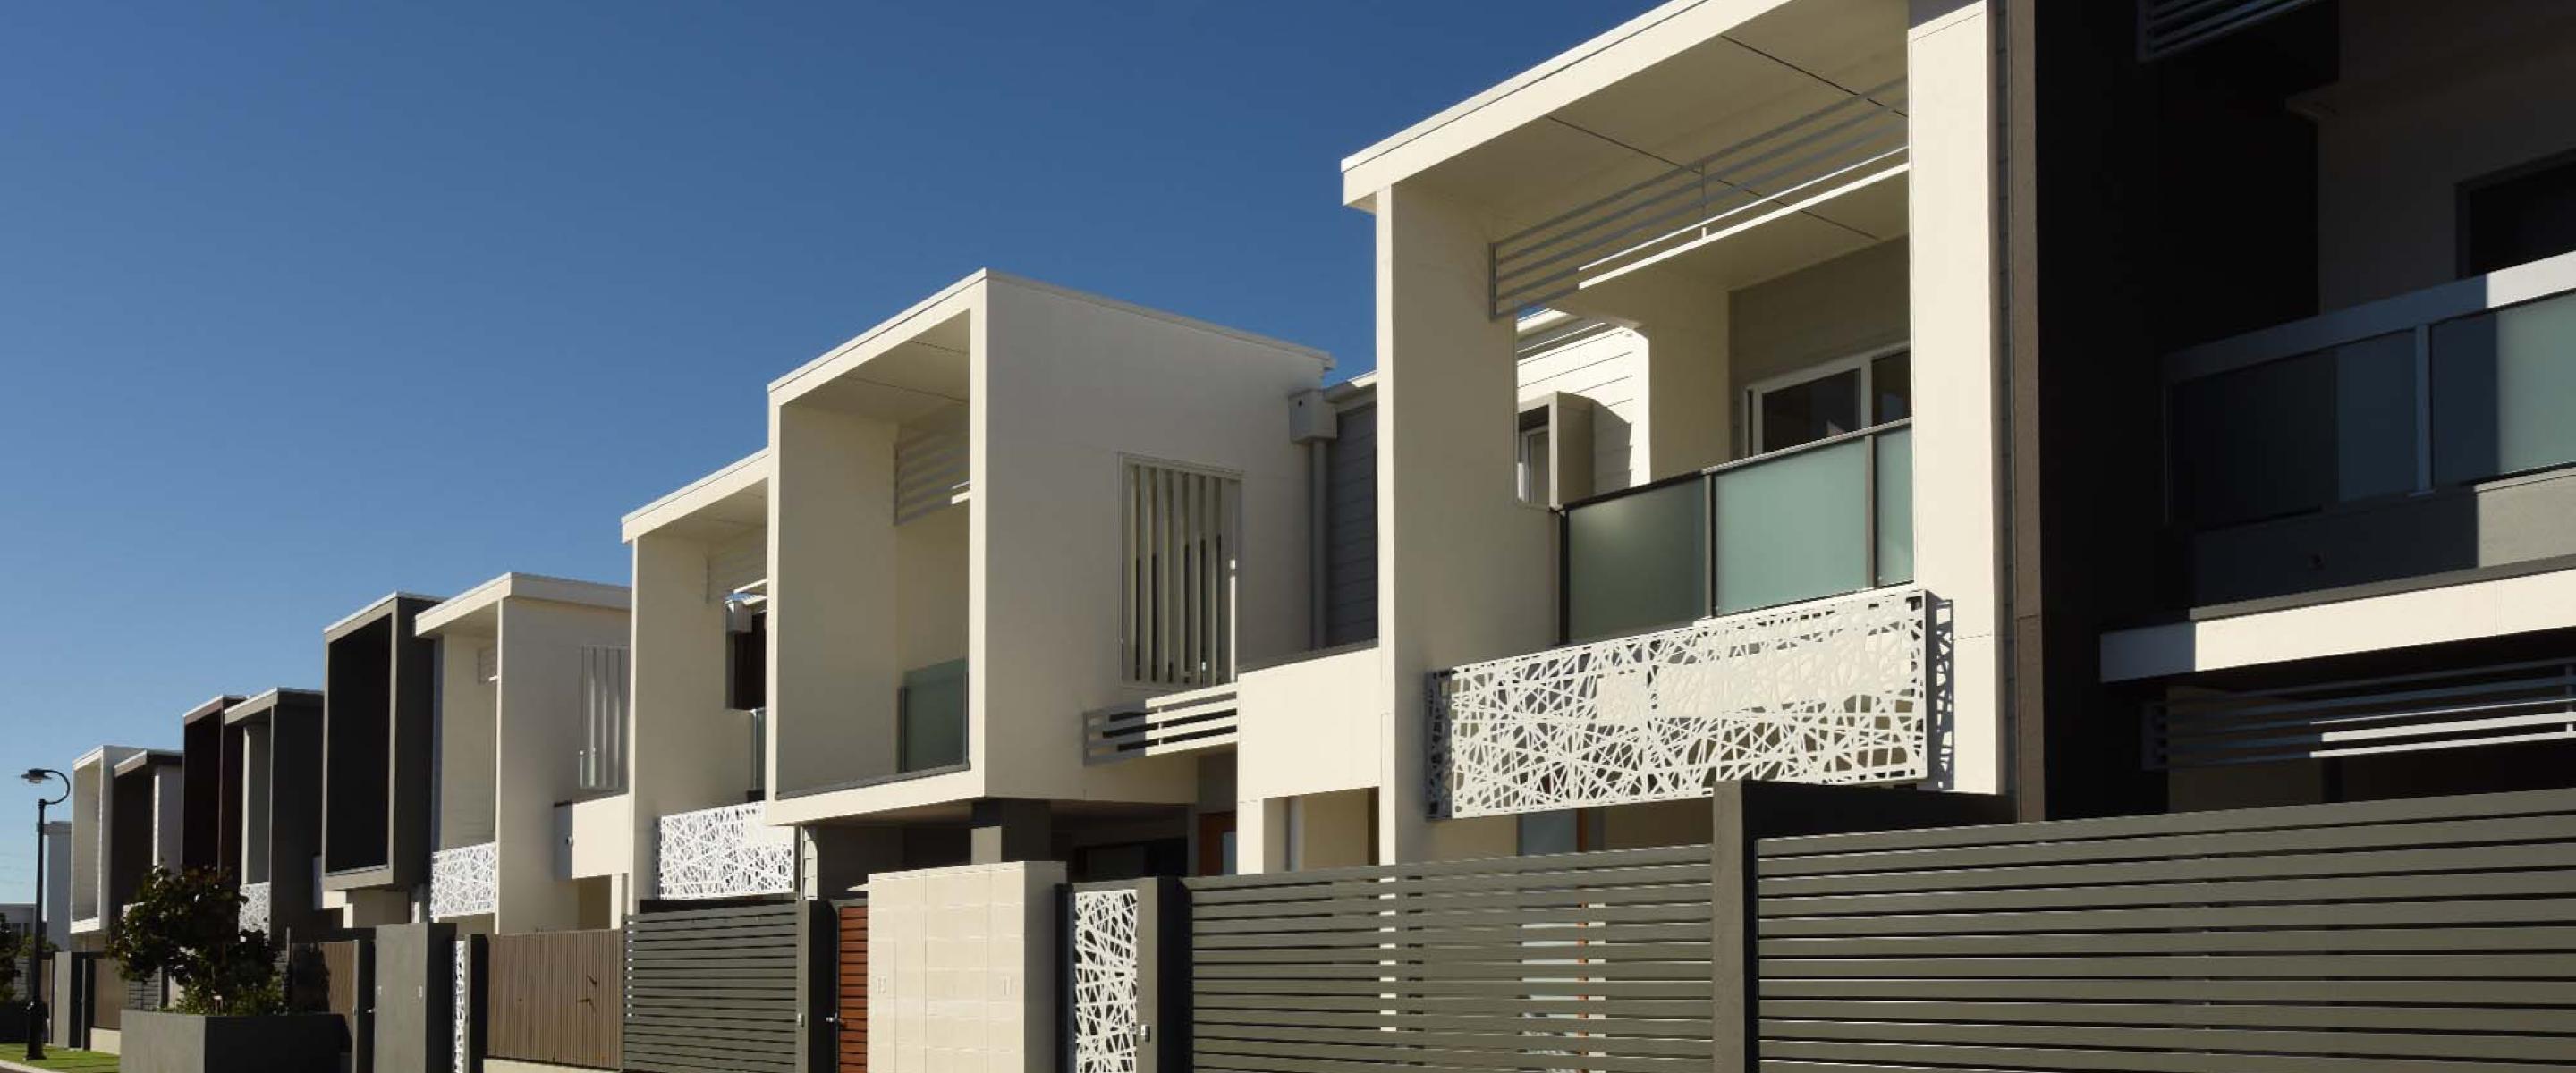 AFS_VUE_Terrace_Homes_Complete_Detail